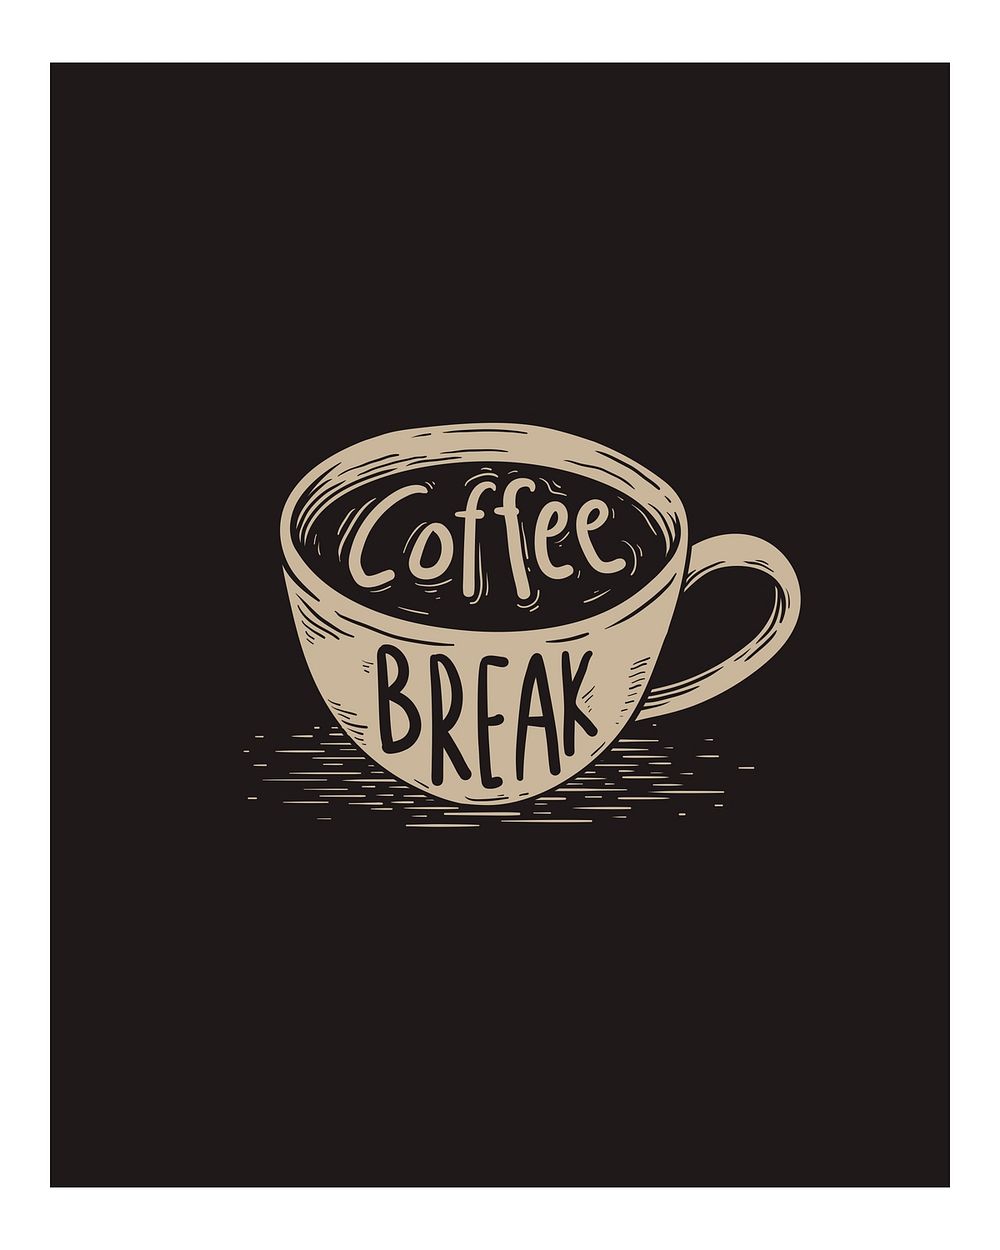 Coffee break illustration wall art print and poster.